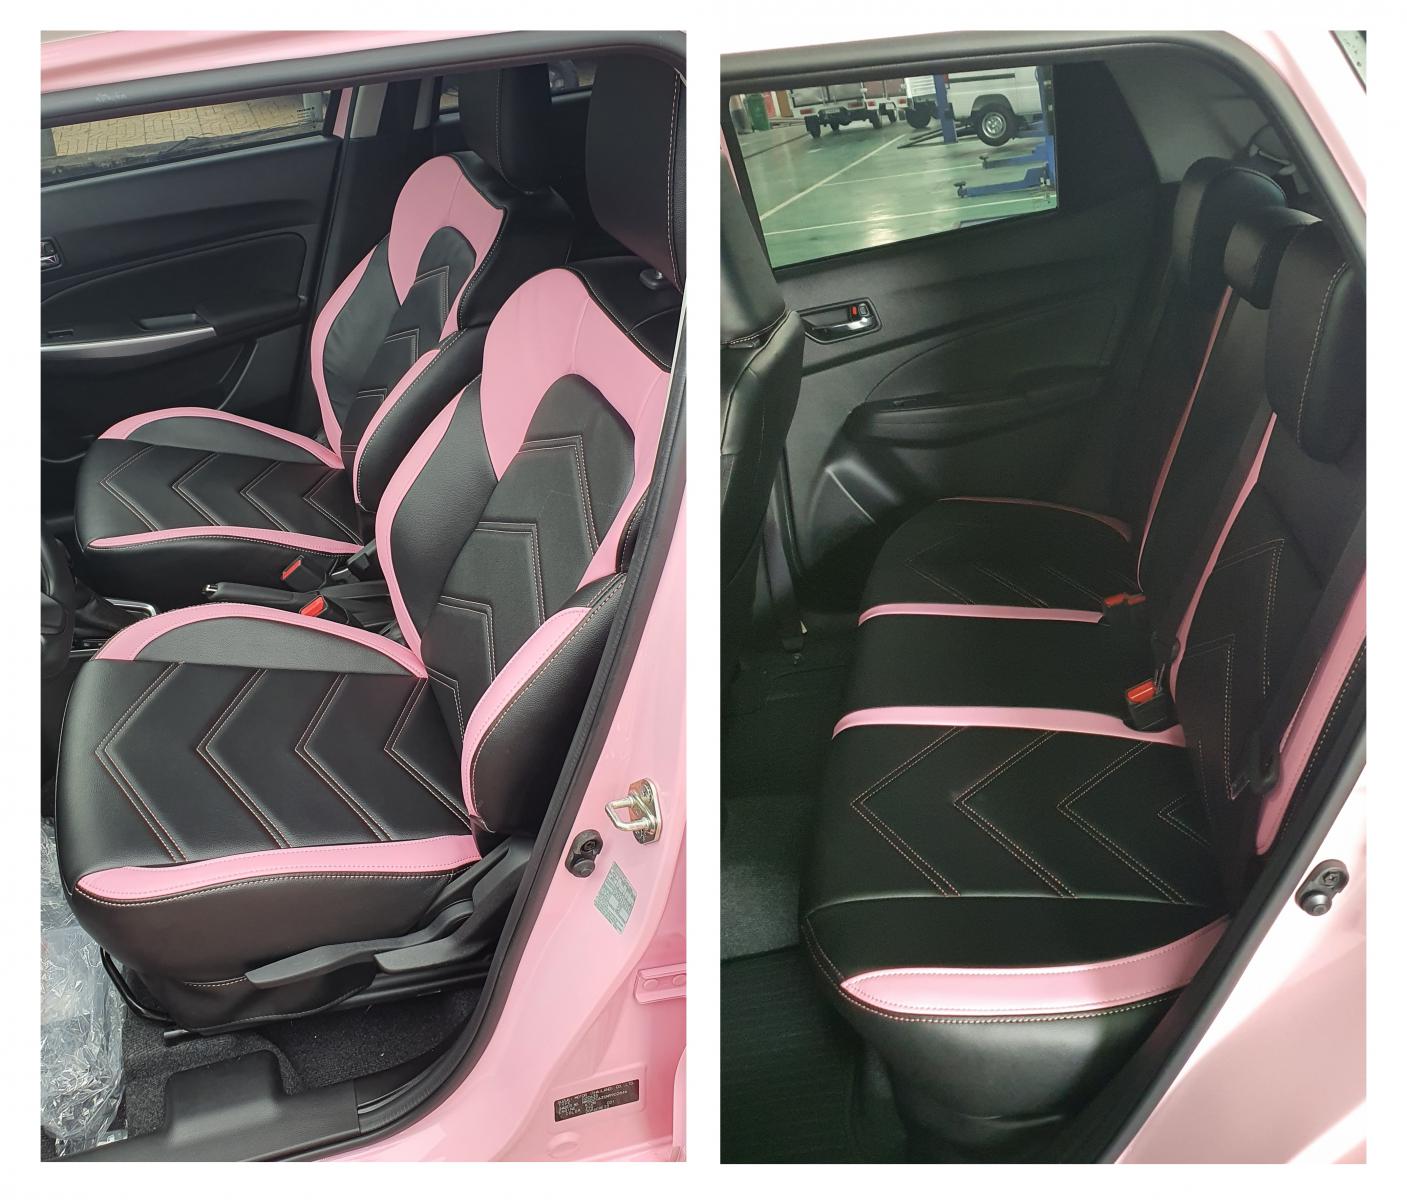 nội thất xe suzuki swift màu hồng